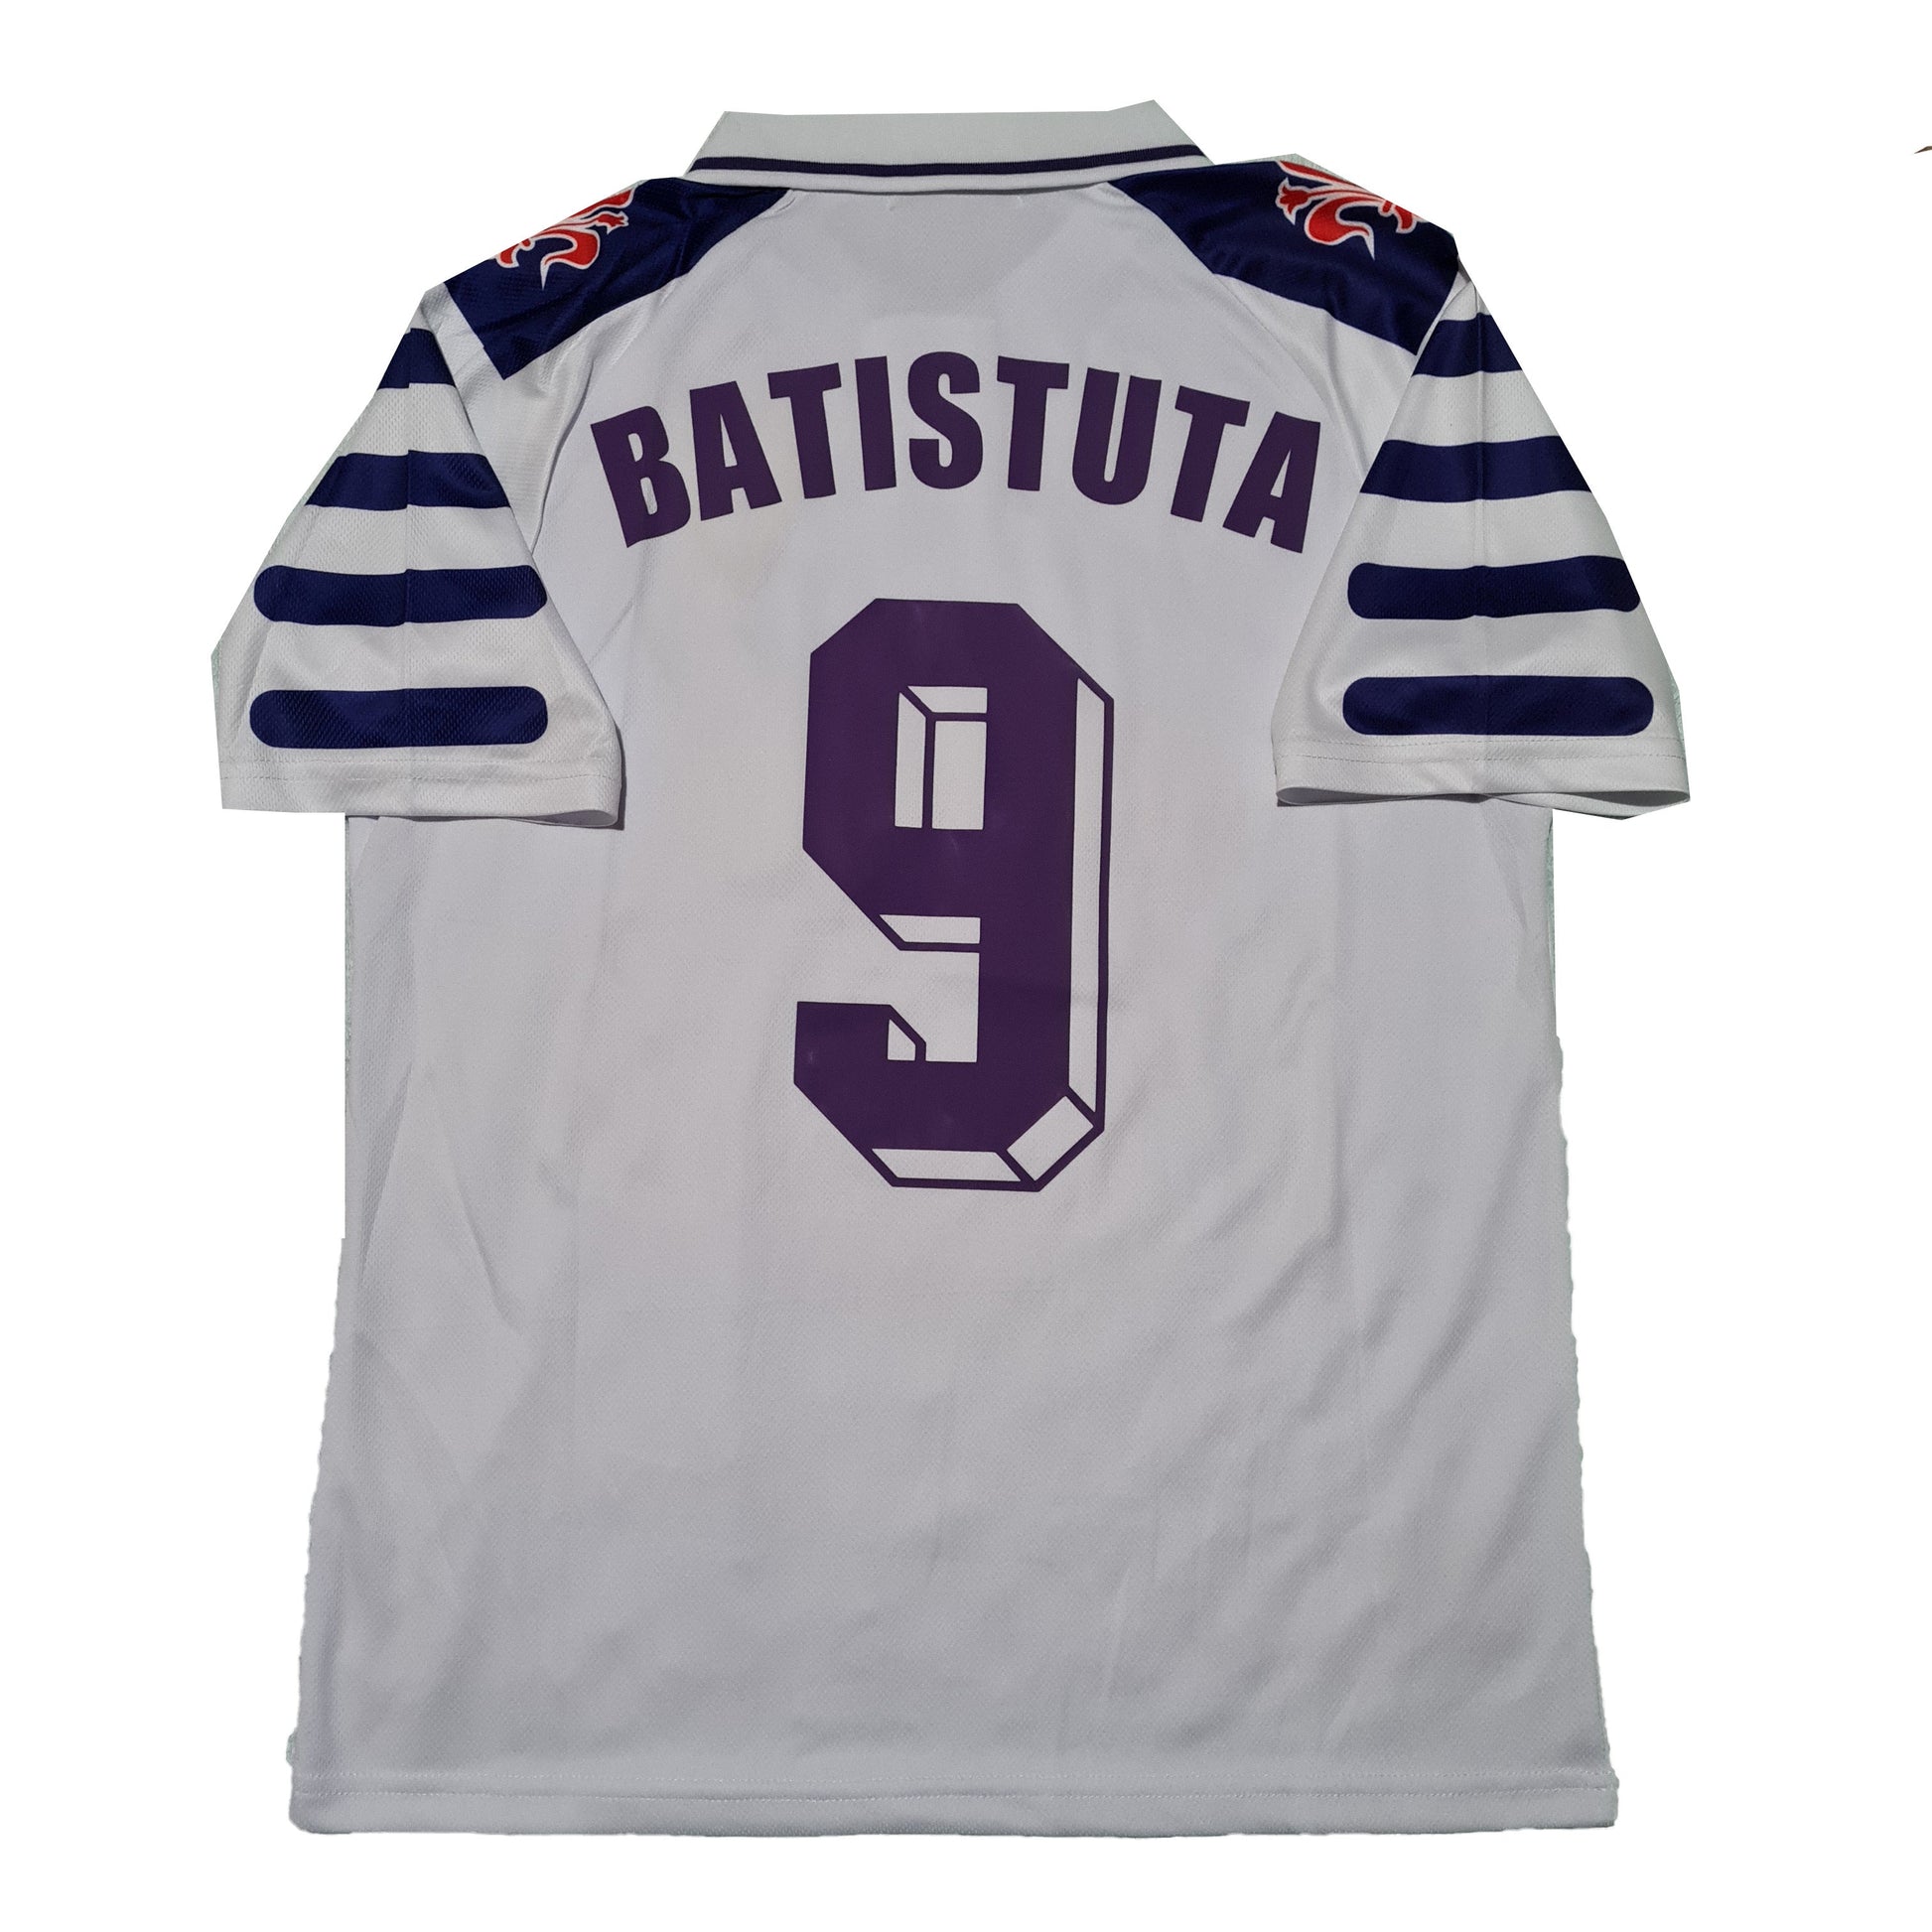 Fiorentina Suplente 1998/99 - Batistuta - Thunder Internacional